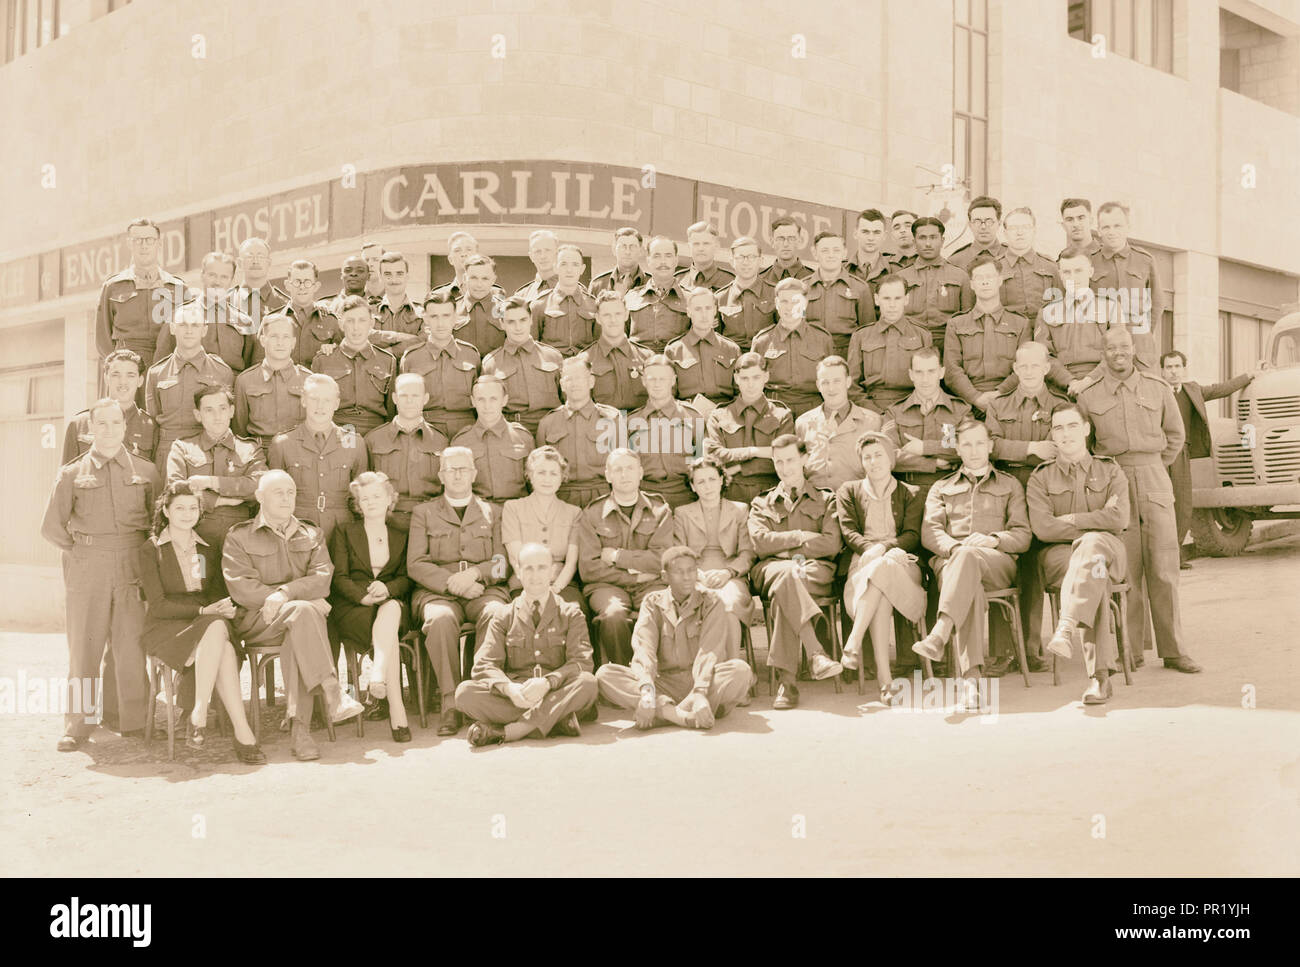 Ordination group at Carlisle House taken Ap. 6, 1944, Jerusalem, Israel Stock Photo